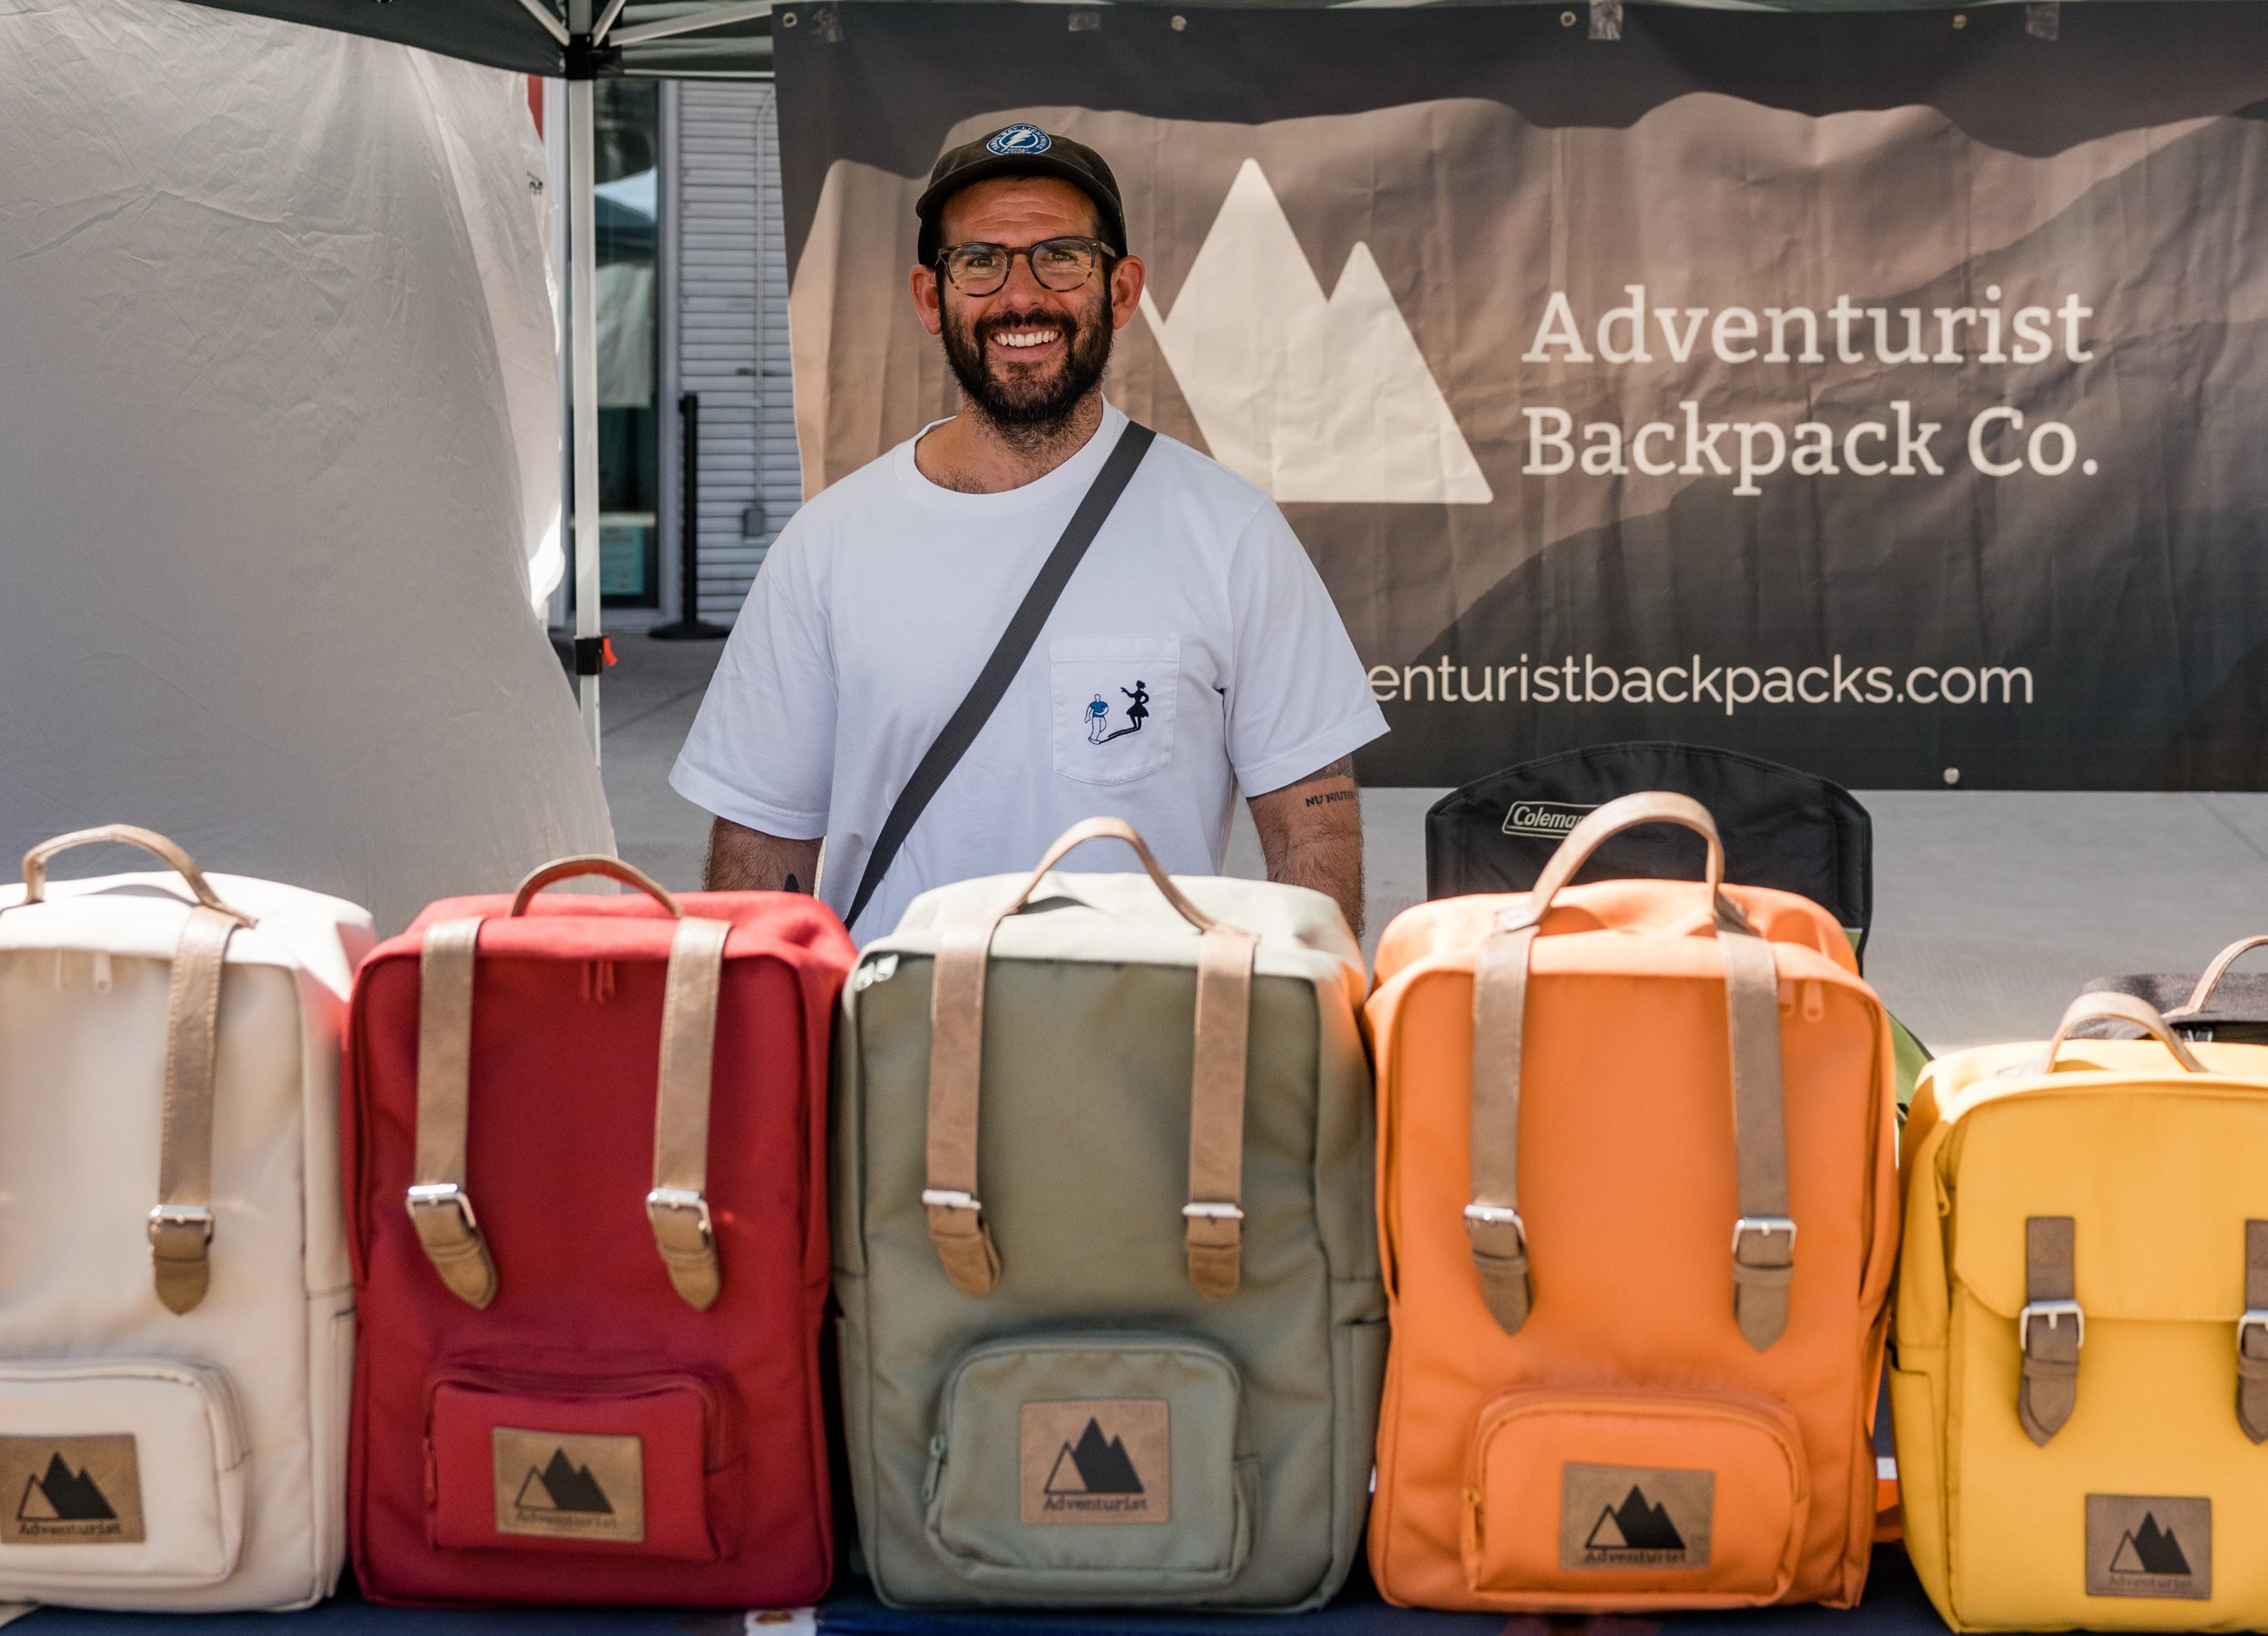 Adventurist Backpack Company